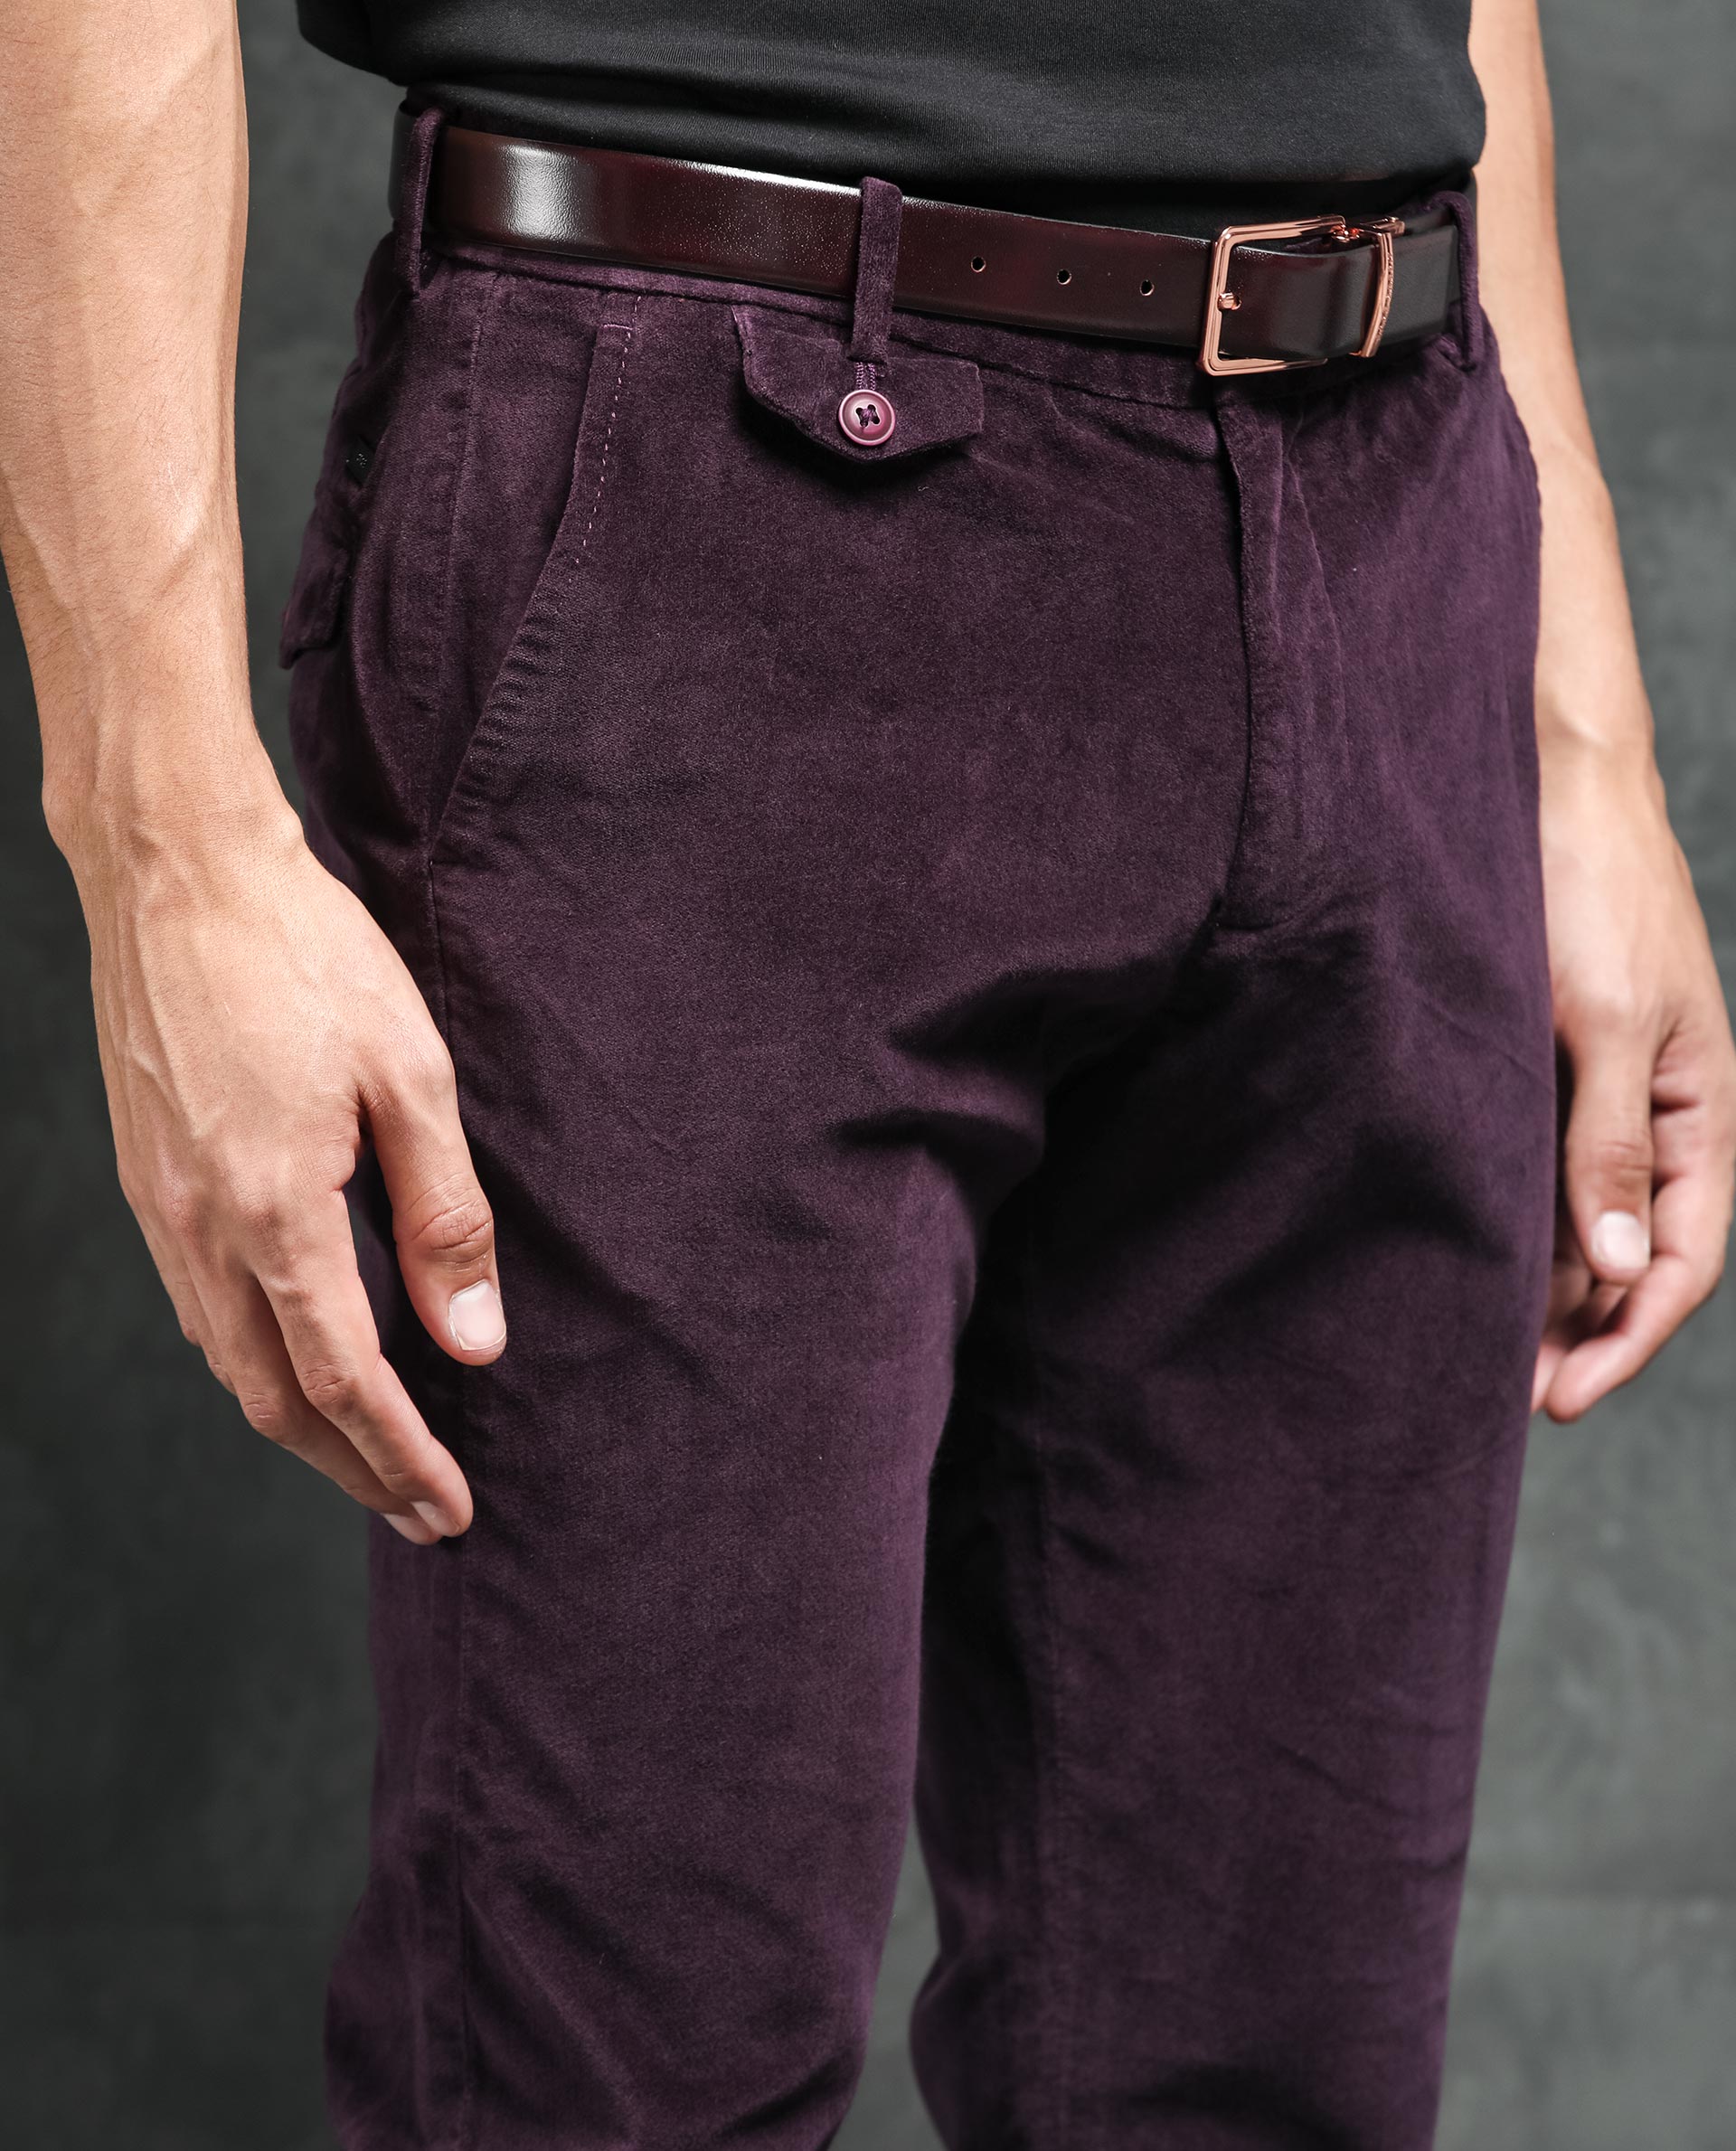 Bewakoof Men's 100% Cotton Casual Trouser - Regular Fit : Amazon.in:  Clothing & Accessories